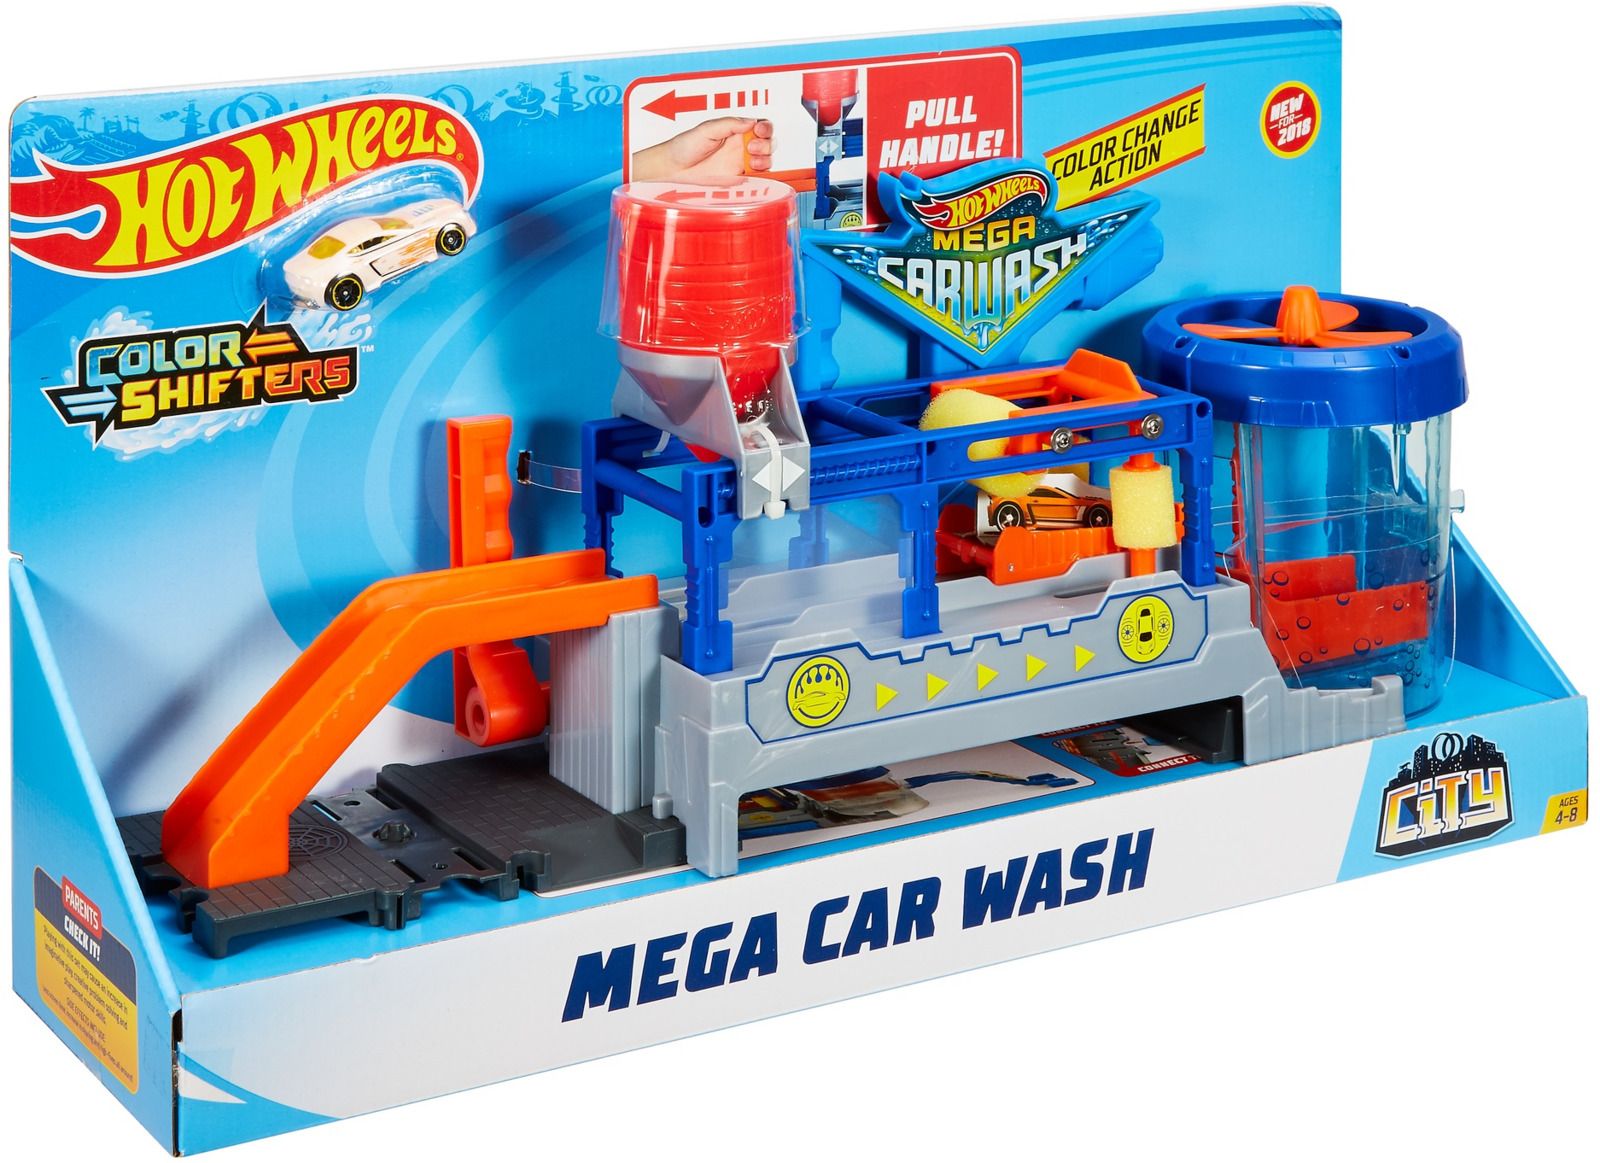  Hot Wheels Mega Car Wash